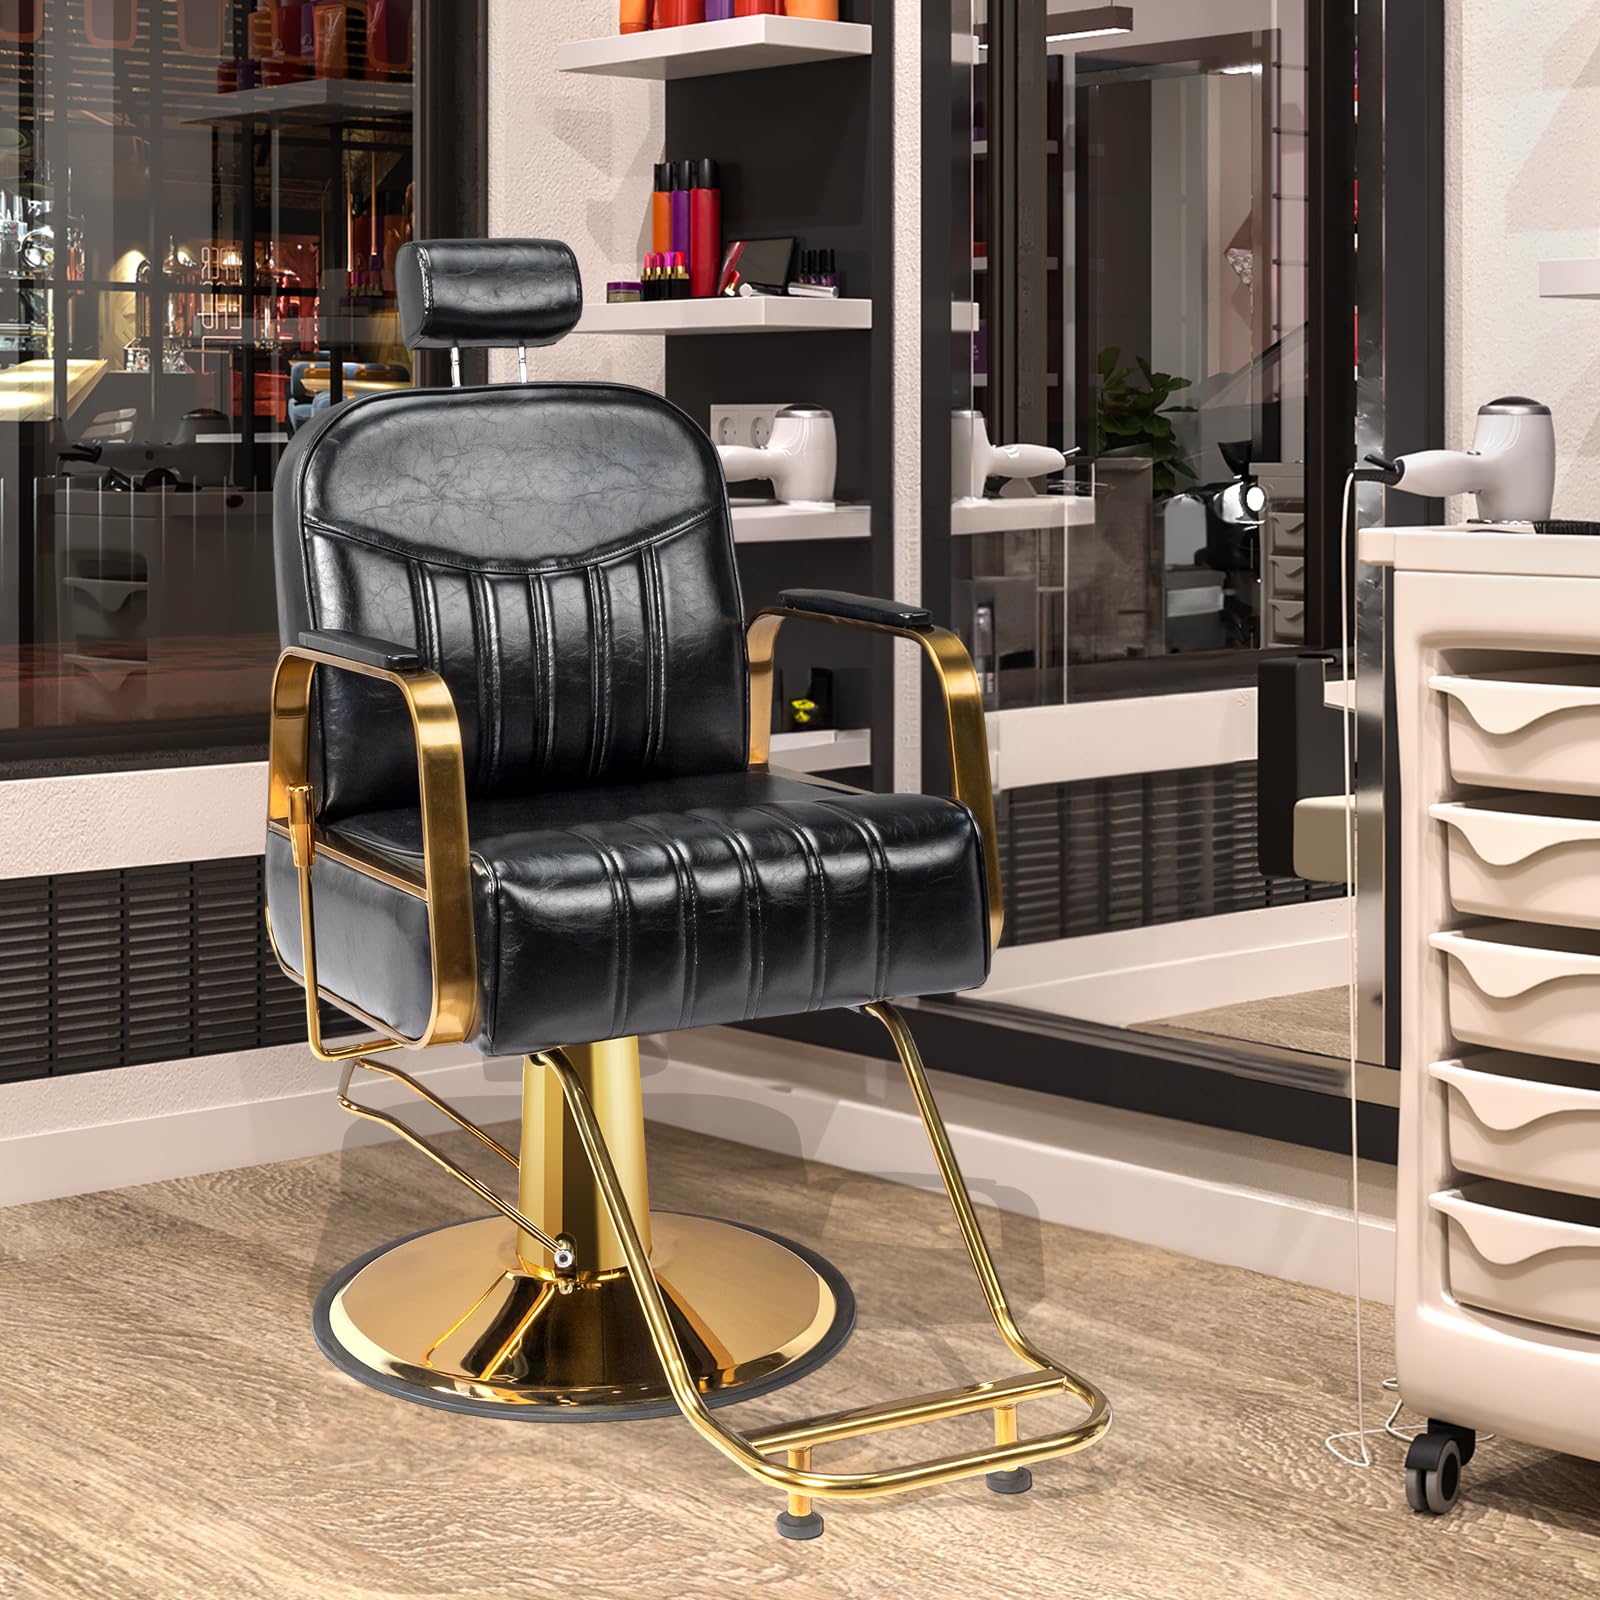 OmySalon All Purpose Heavy Duty Hair Salon Chair Barber Chair with Reclining Back Black & Gold